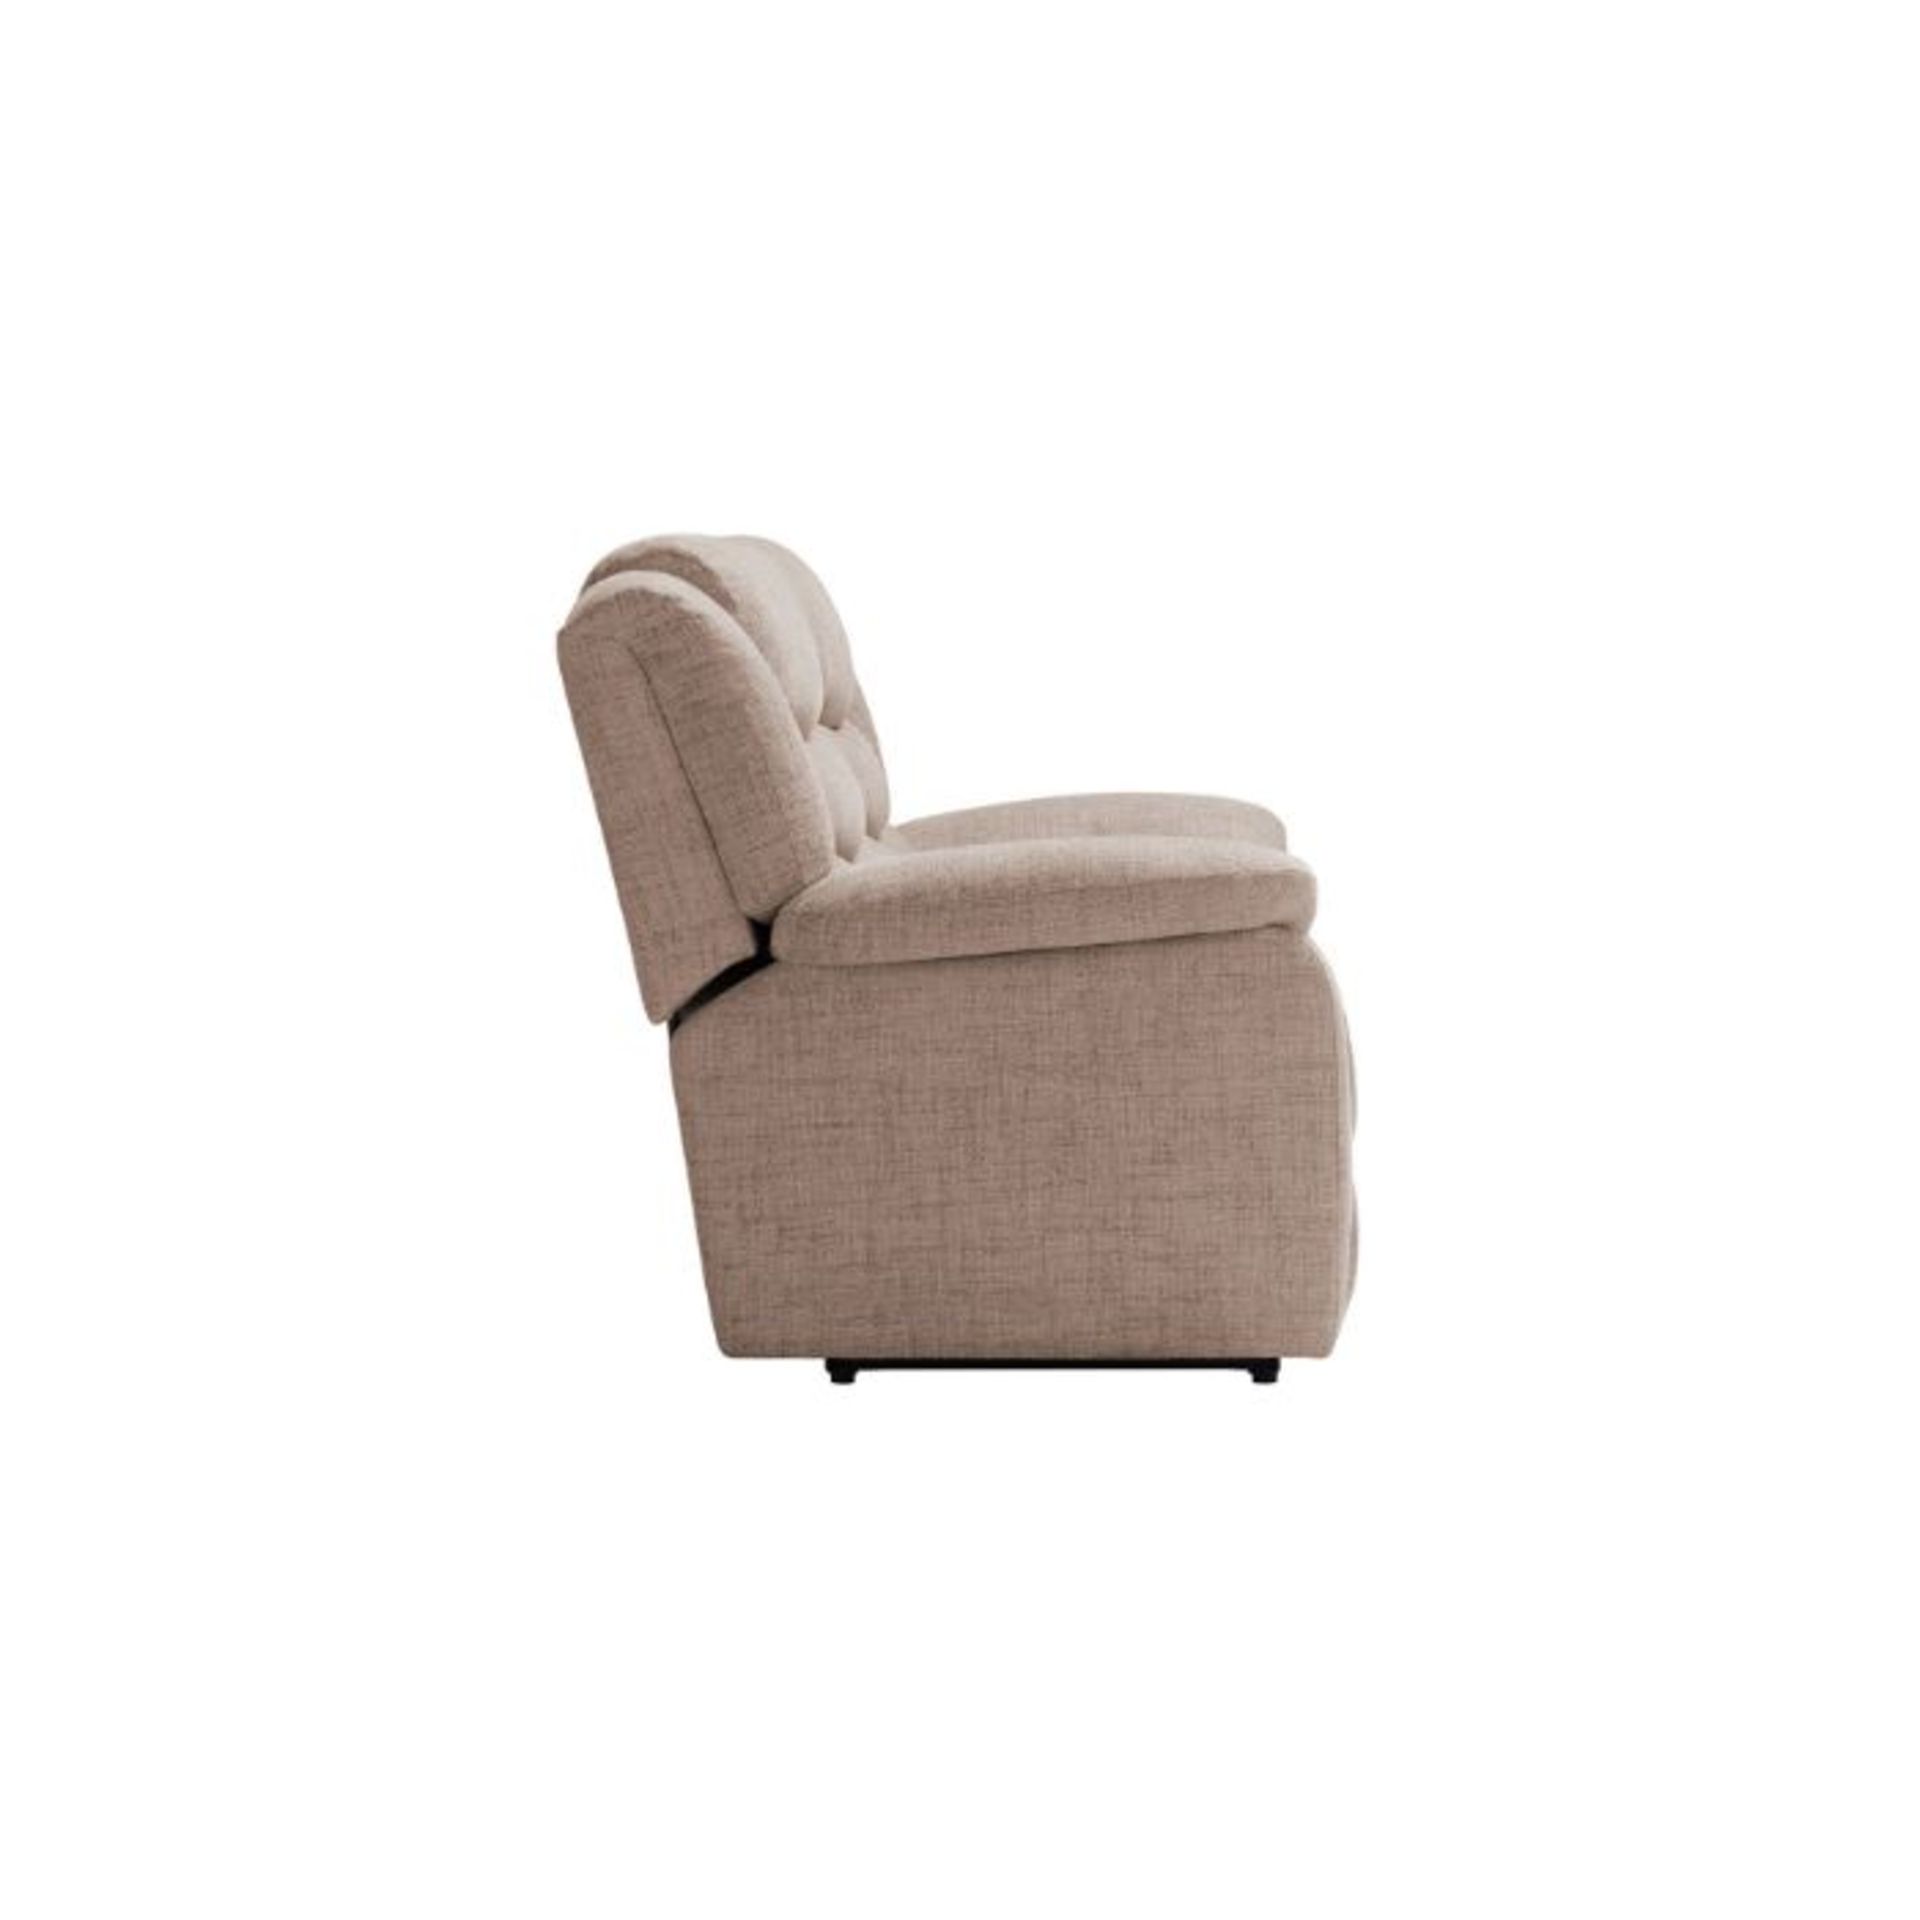 Oak Furnitureland Marlow 3 Seater Sofa In Dorset Beige Fabric RRP ?949.99 Our Marlow range is - Image 4 of 5